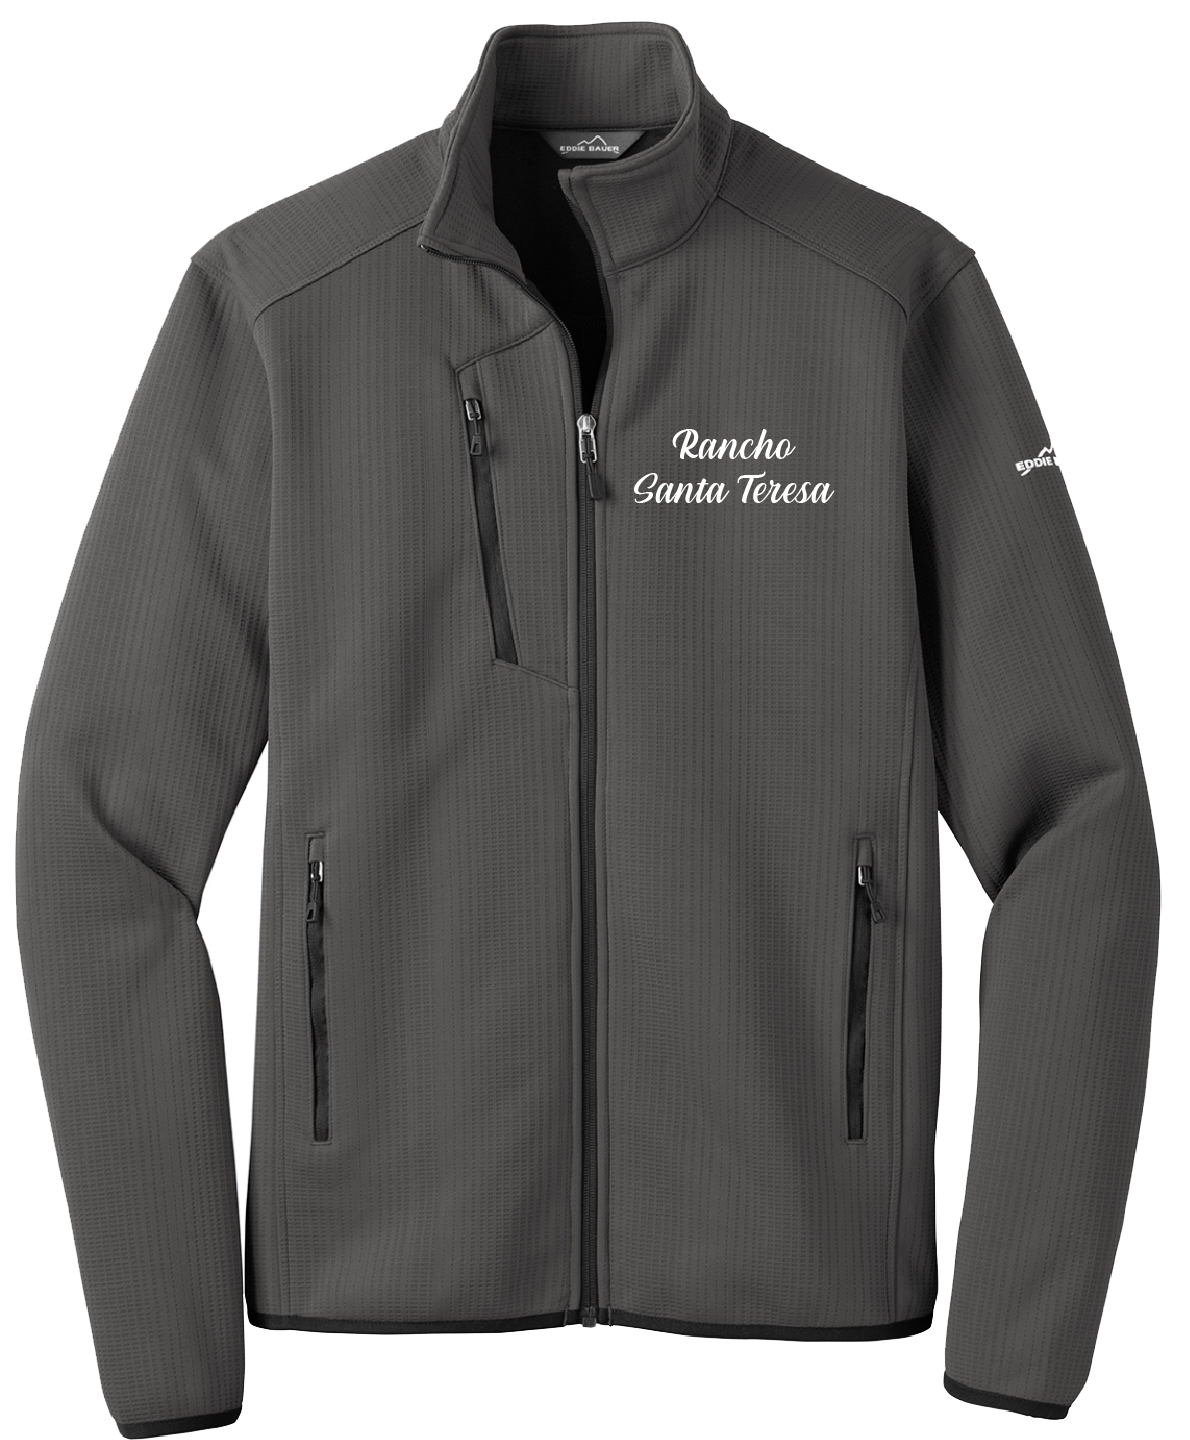 Rancho Santa Teresa - Mens - Eddie Bauer ® Dash Full-Zip Fleece Jacket